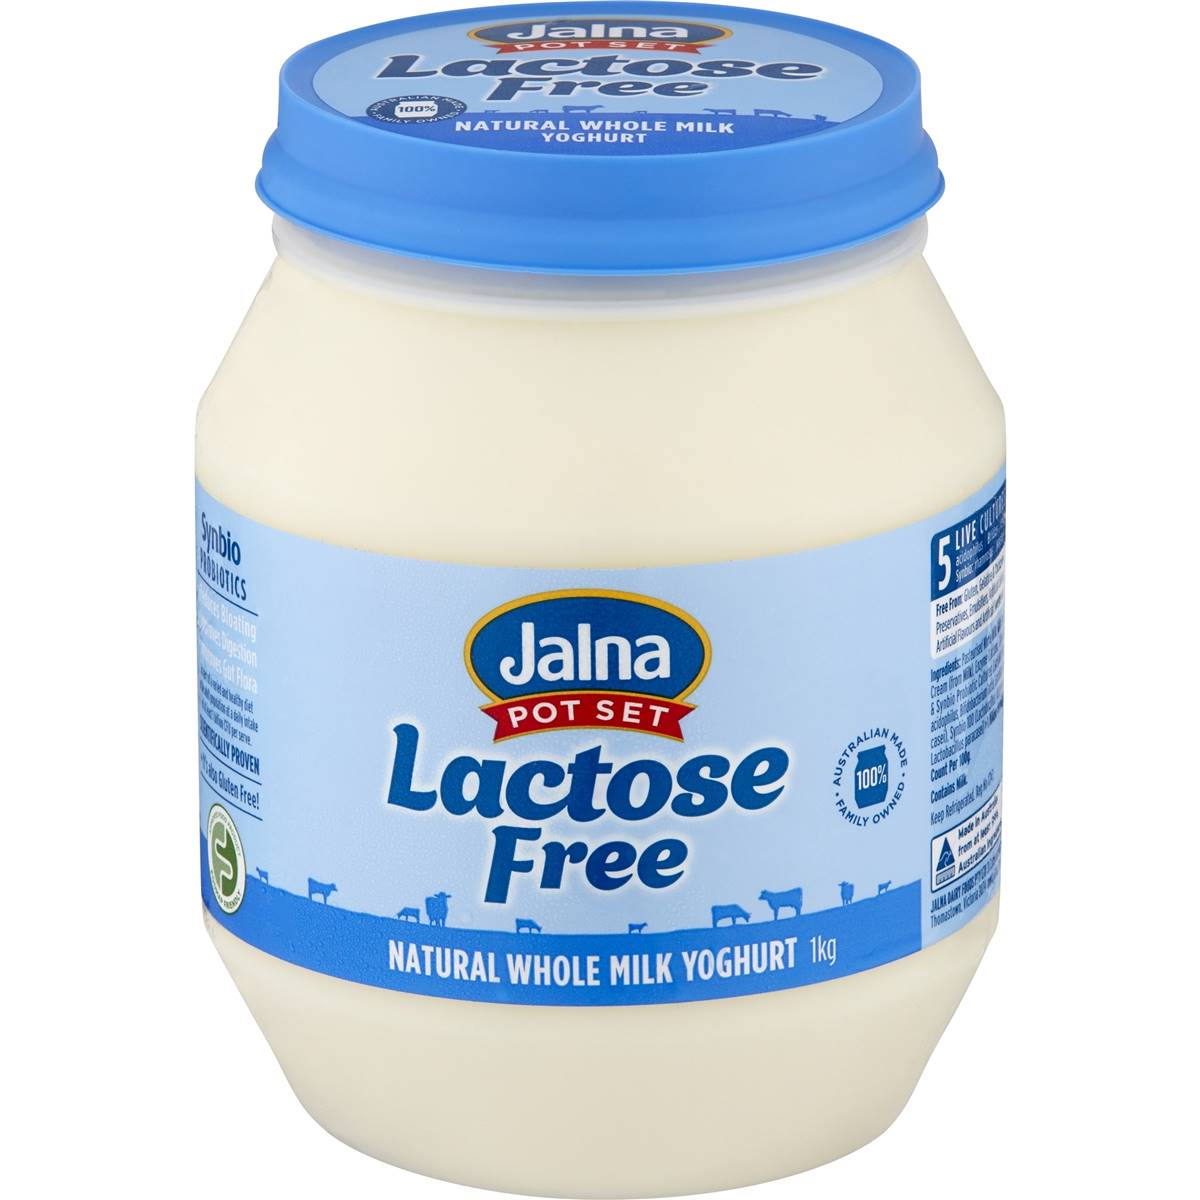 Jalna Whole Milk Yoghurt Lactose Free Natural